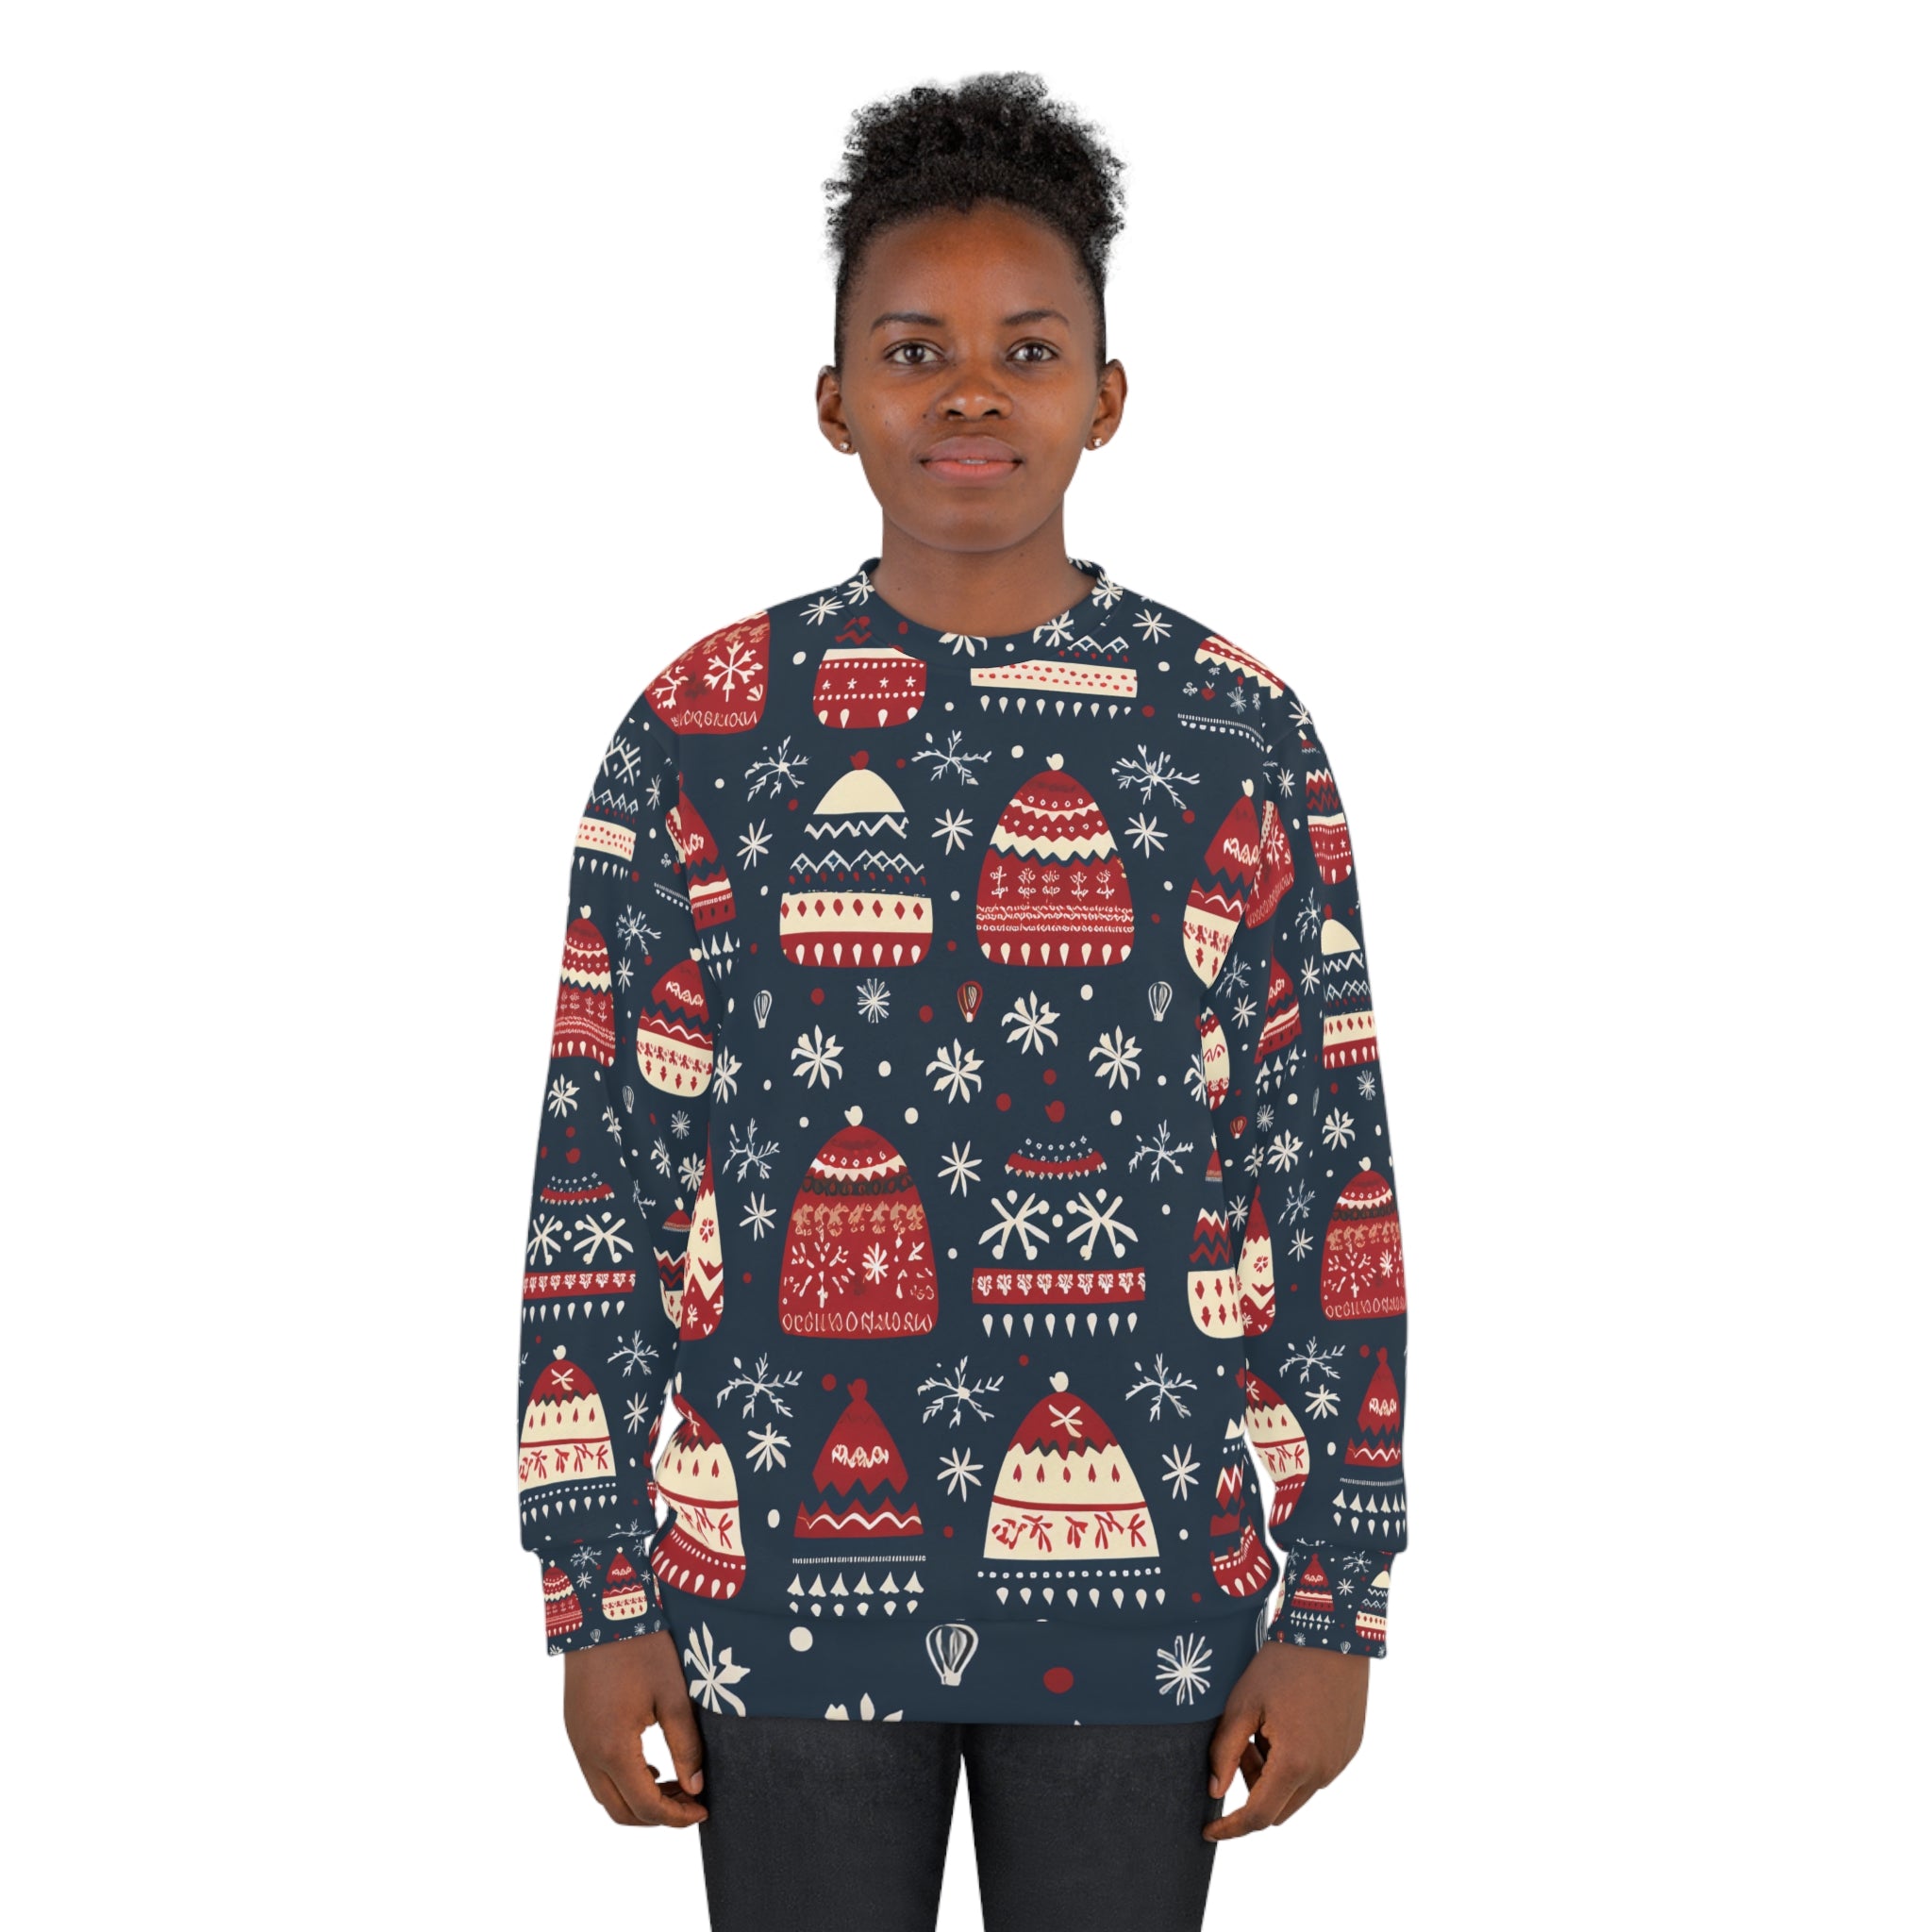 Cap Cascade - Christmas Sweater